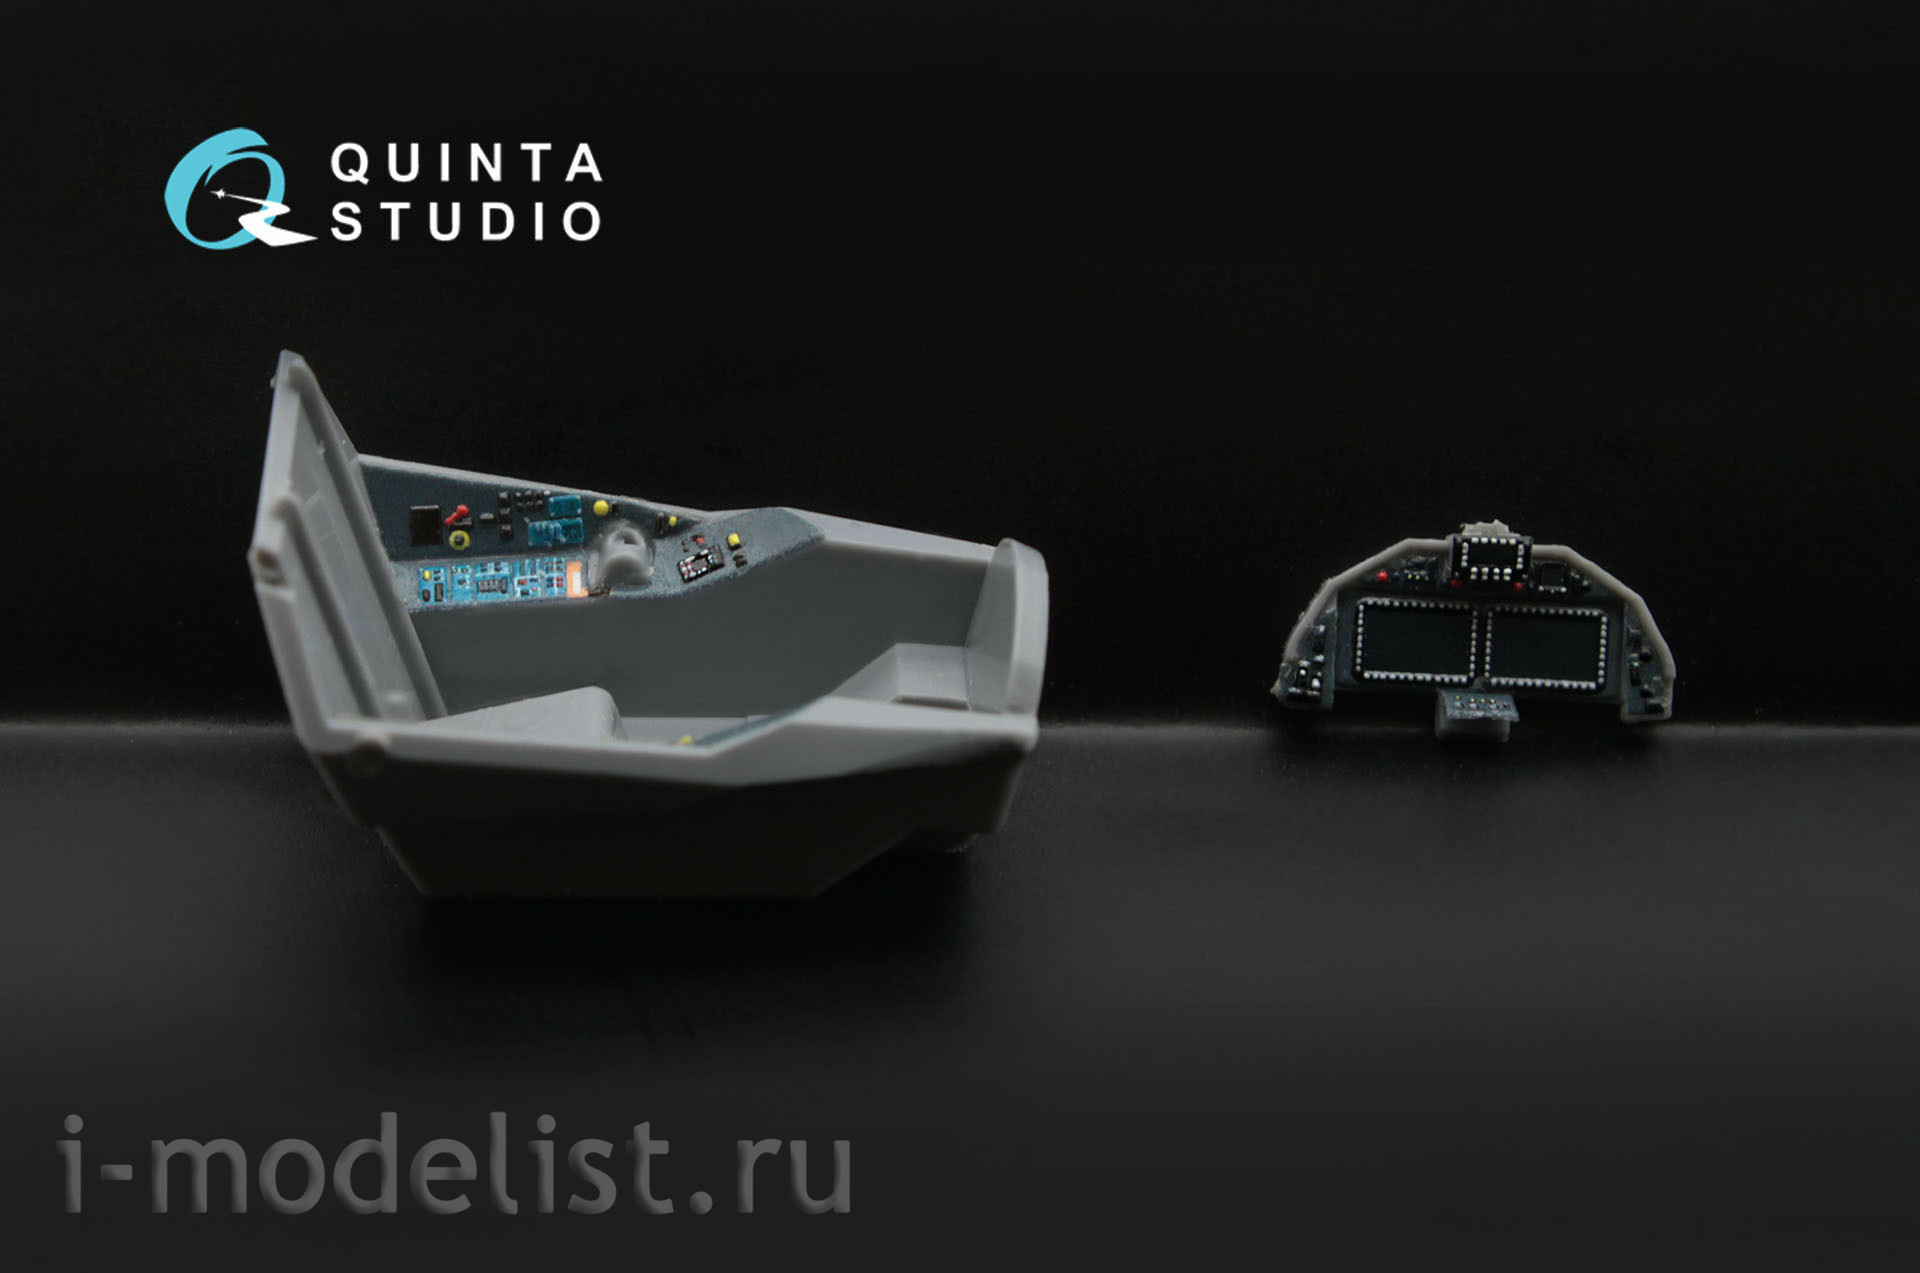 QD72004 Quinta Studio 1/72 Decal 3D interior cockpit of the su-57 (for model Zvezda 7319)